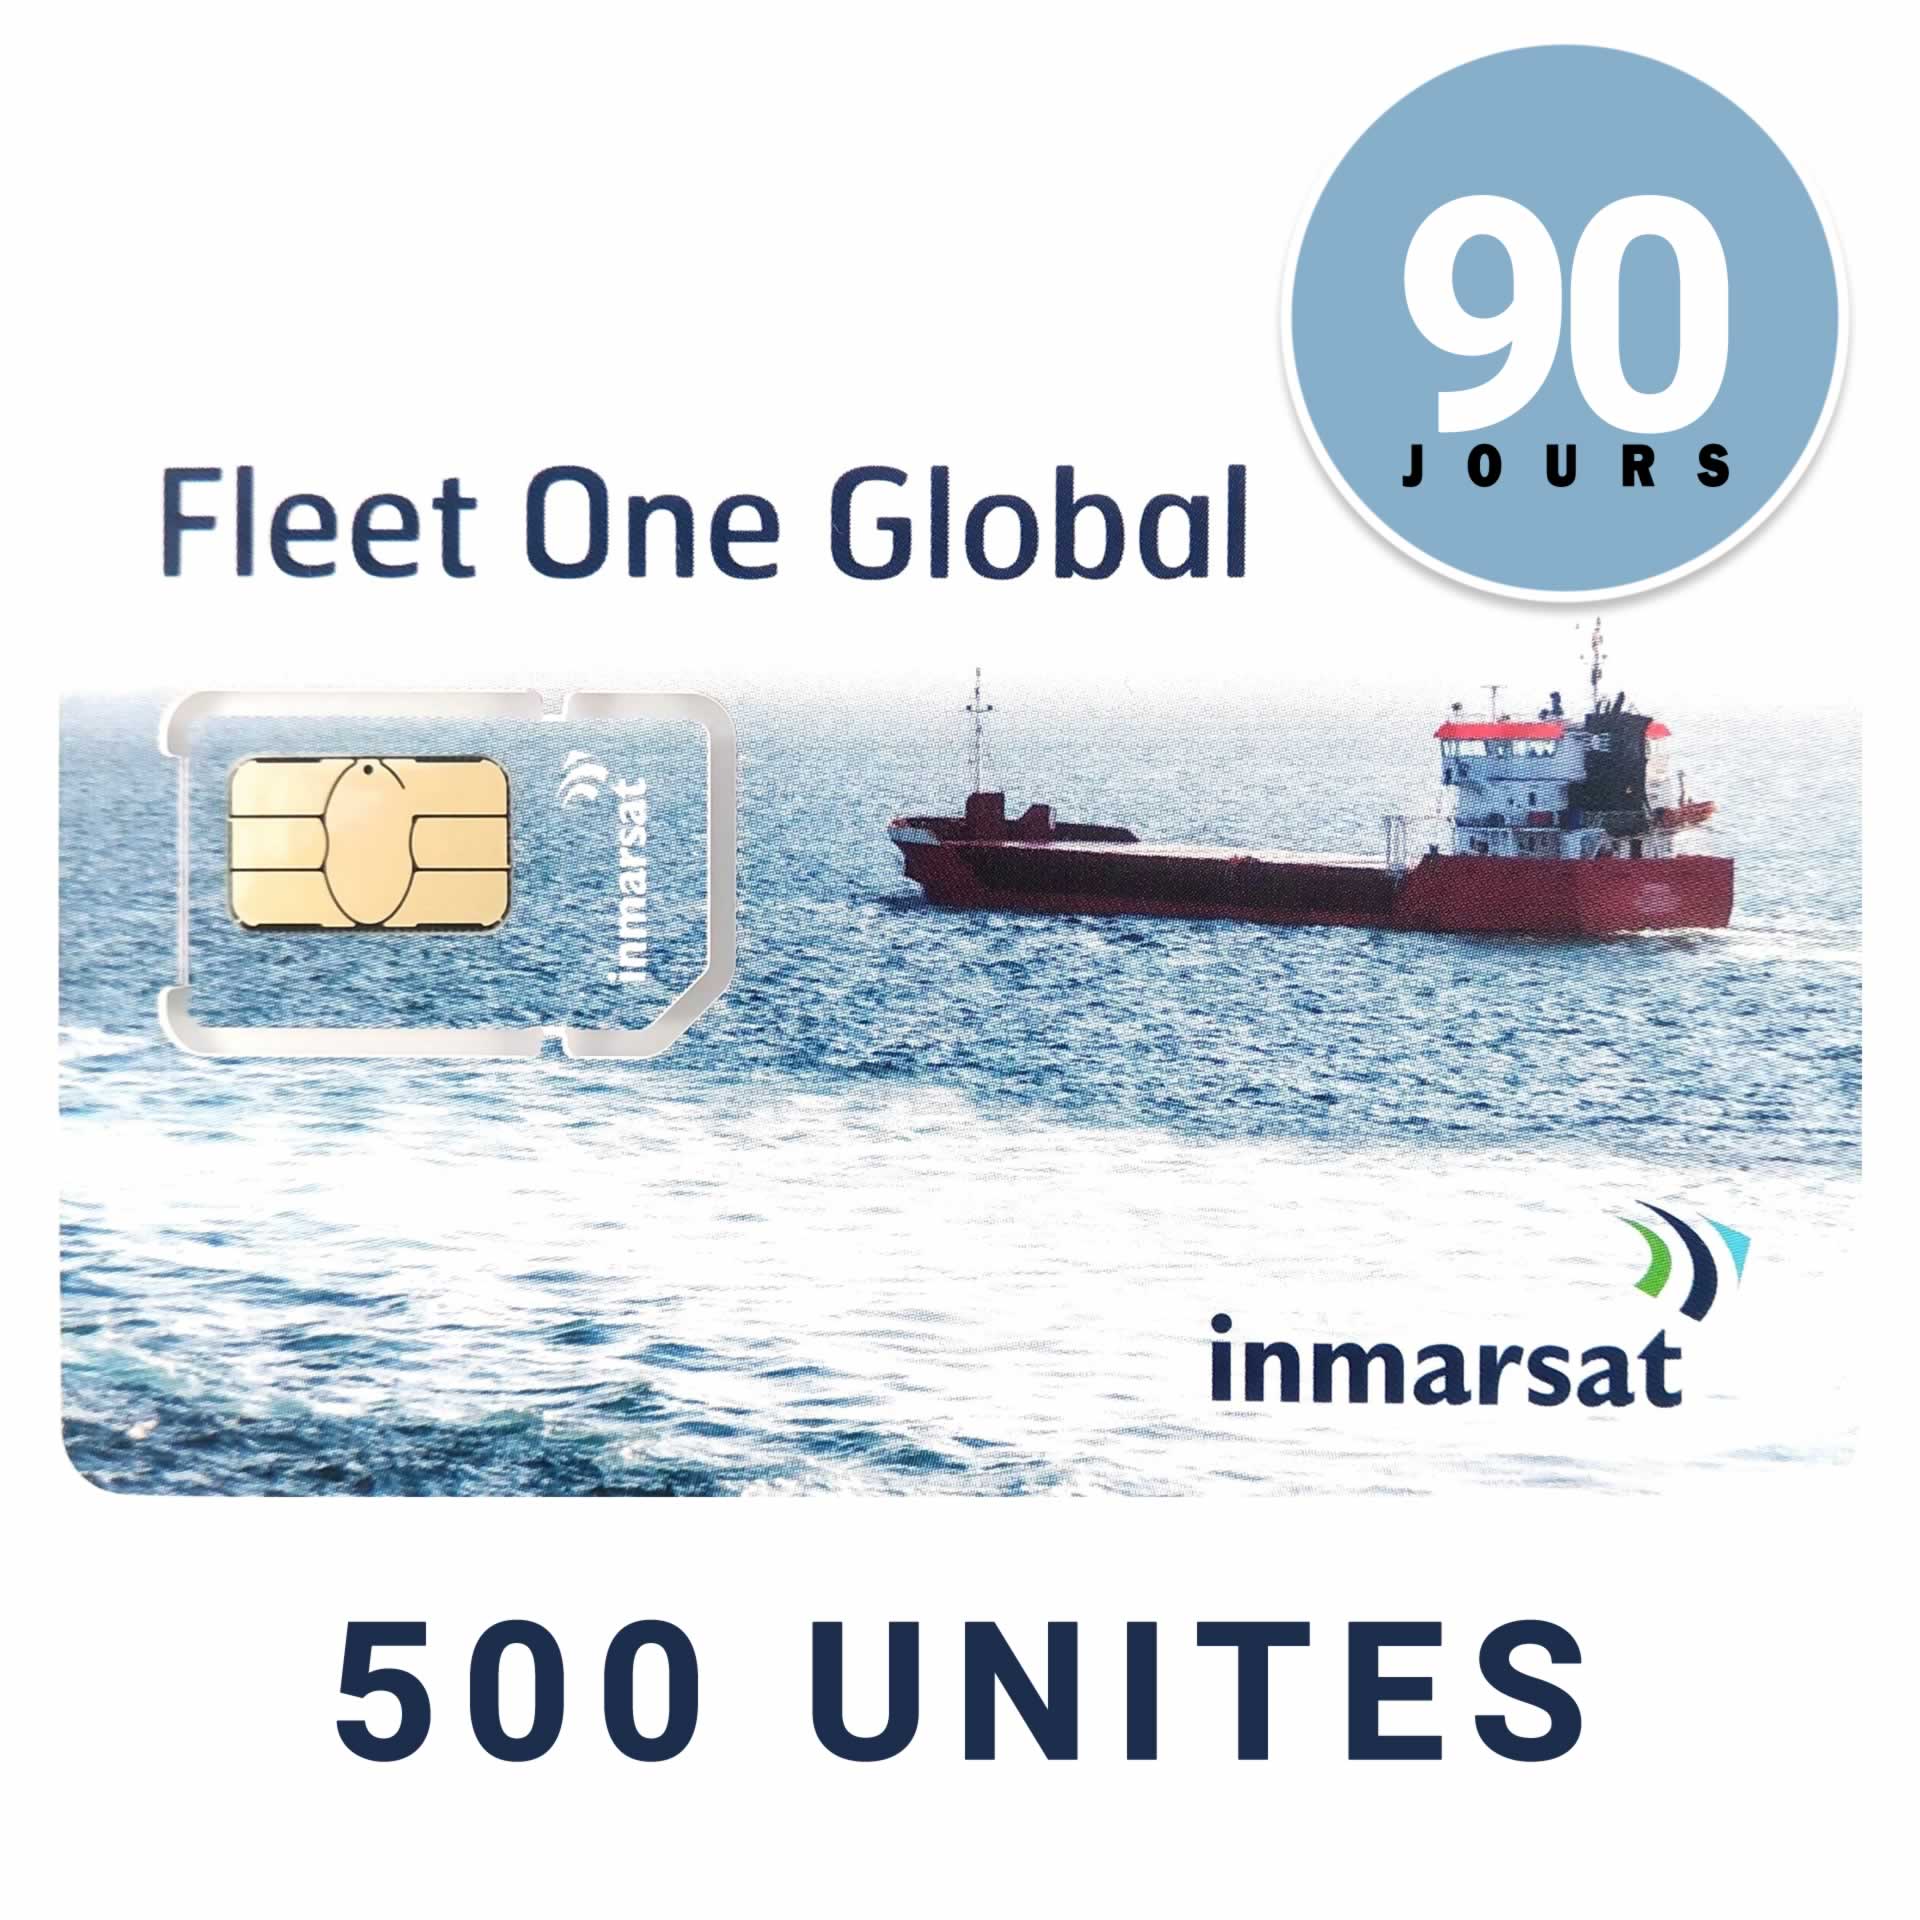 Carte Prépayée INMARSAT Rechargeable GLOBAL FLEET ONE - 500 UNITES - 90 JOURS